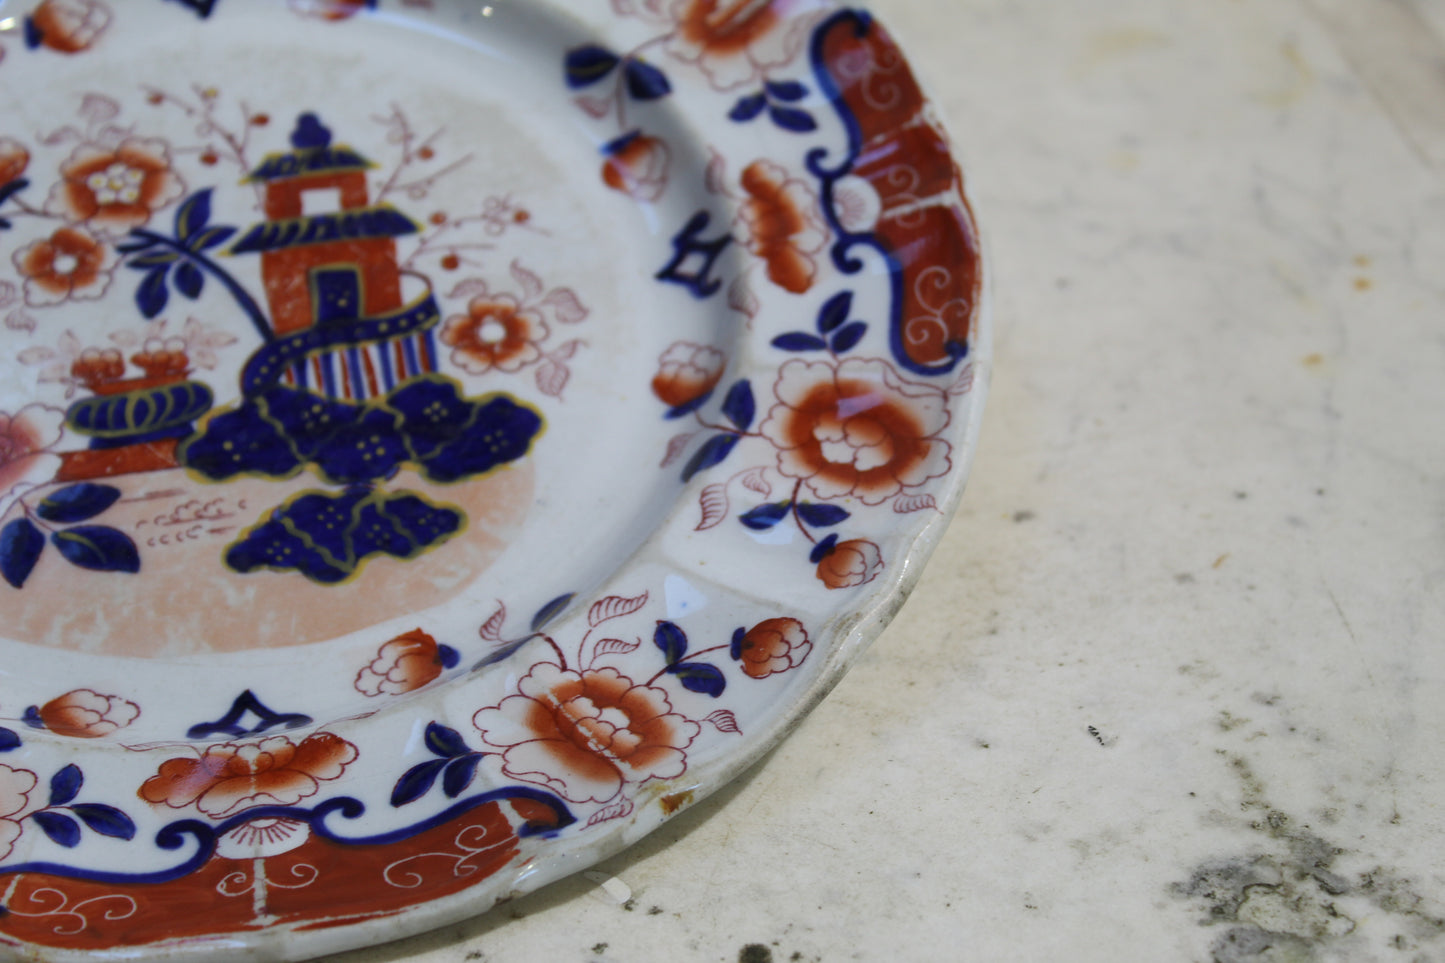 Eighteen Century Decorative Plates